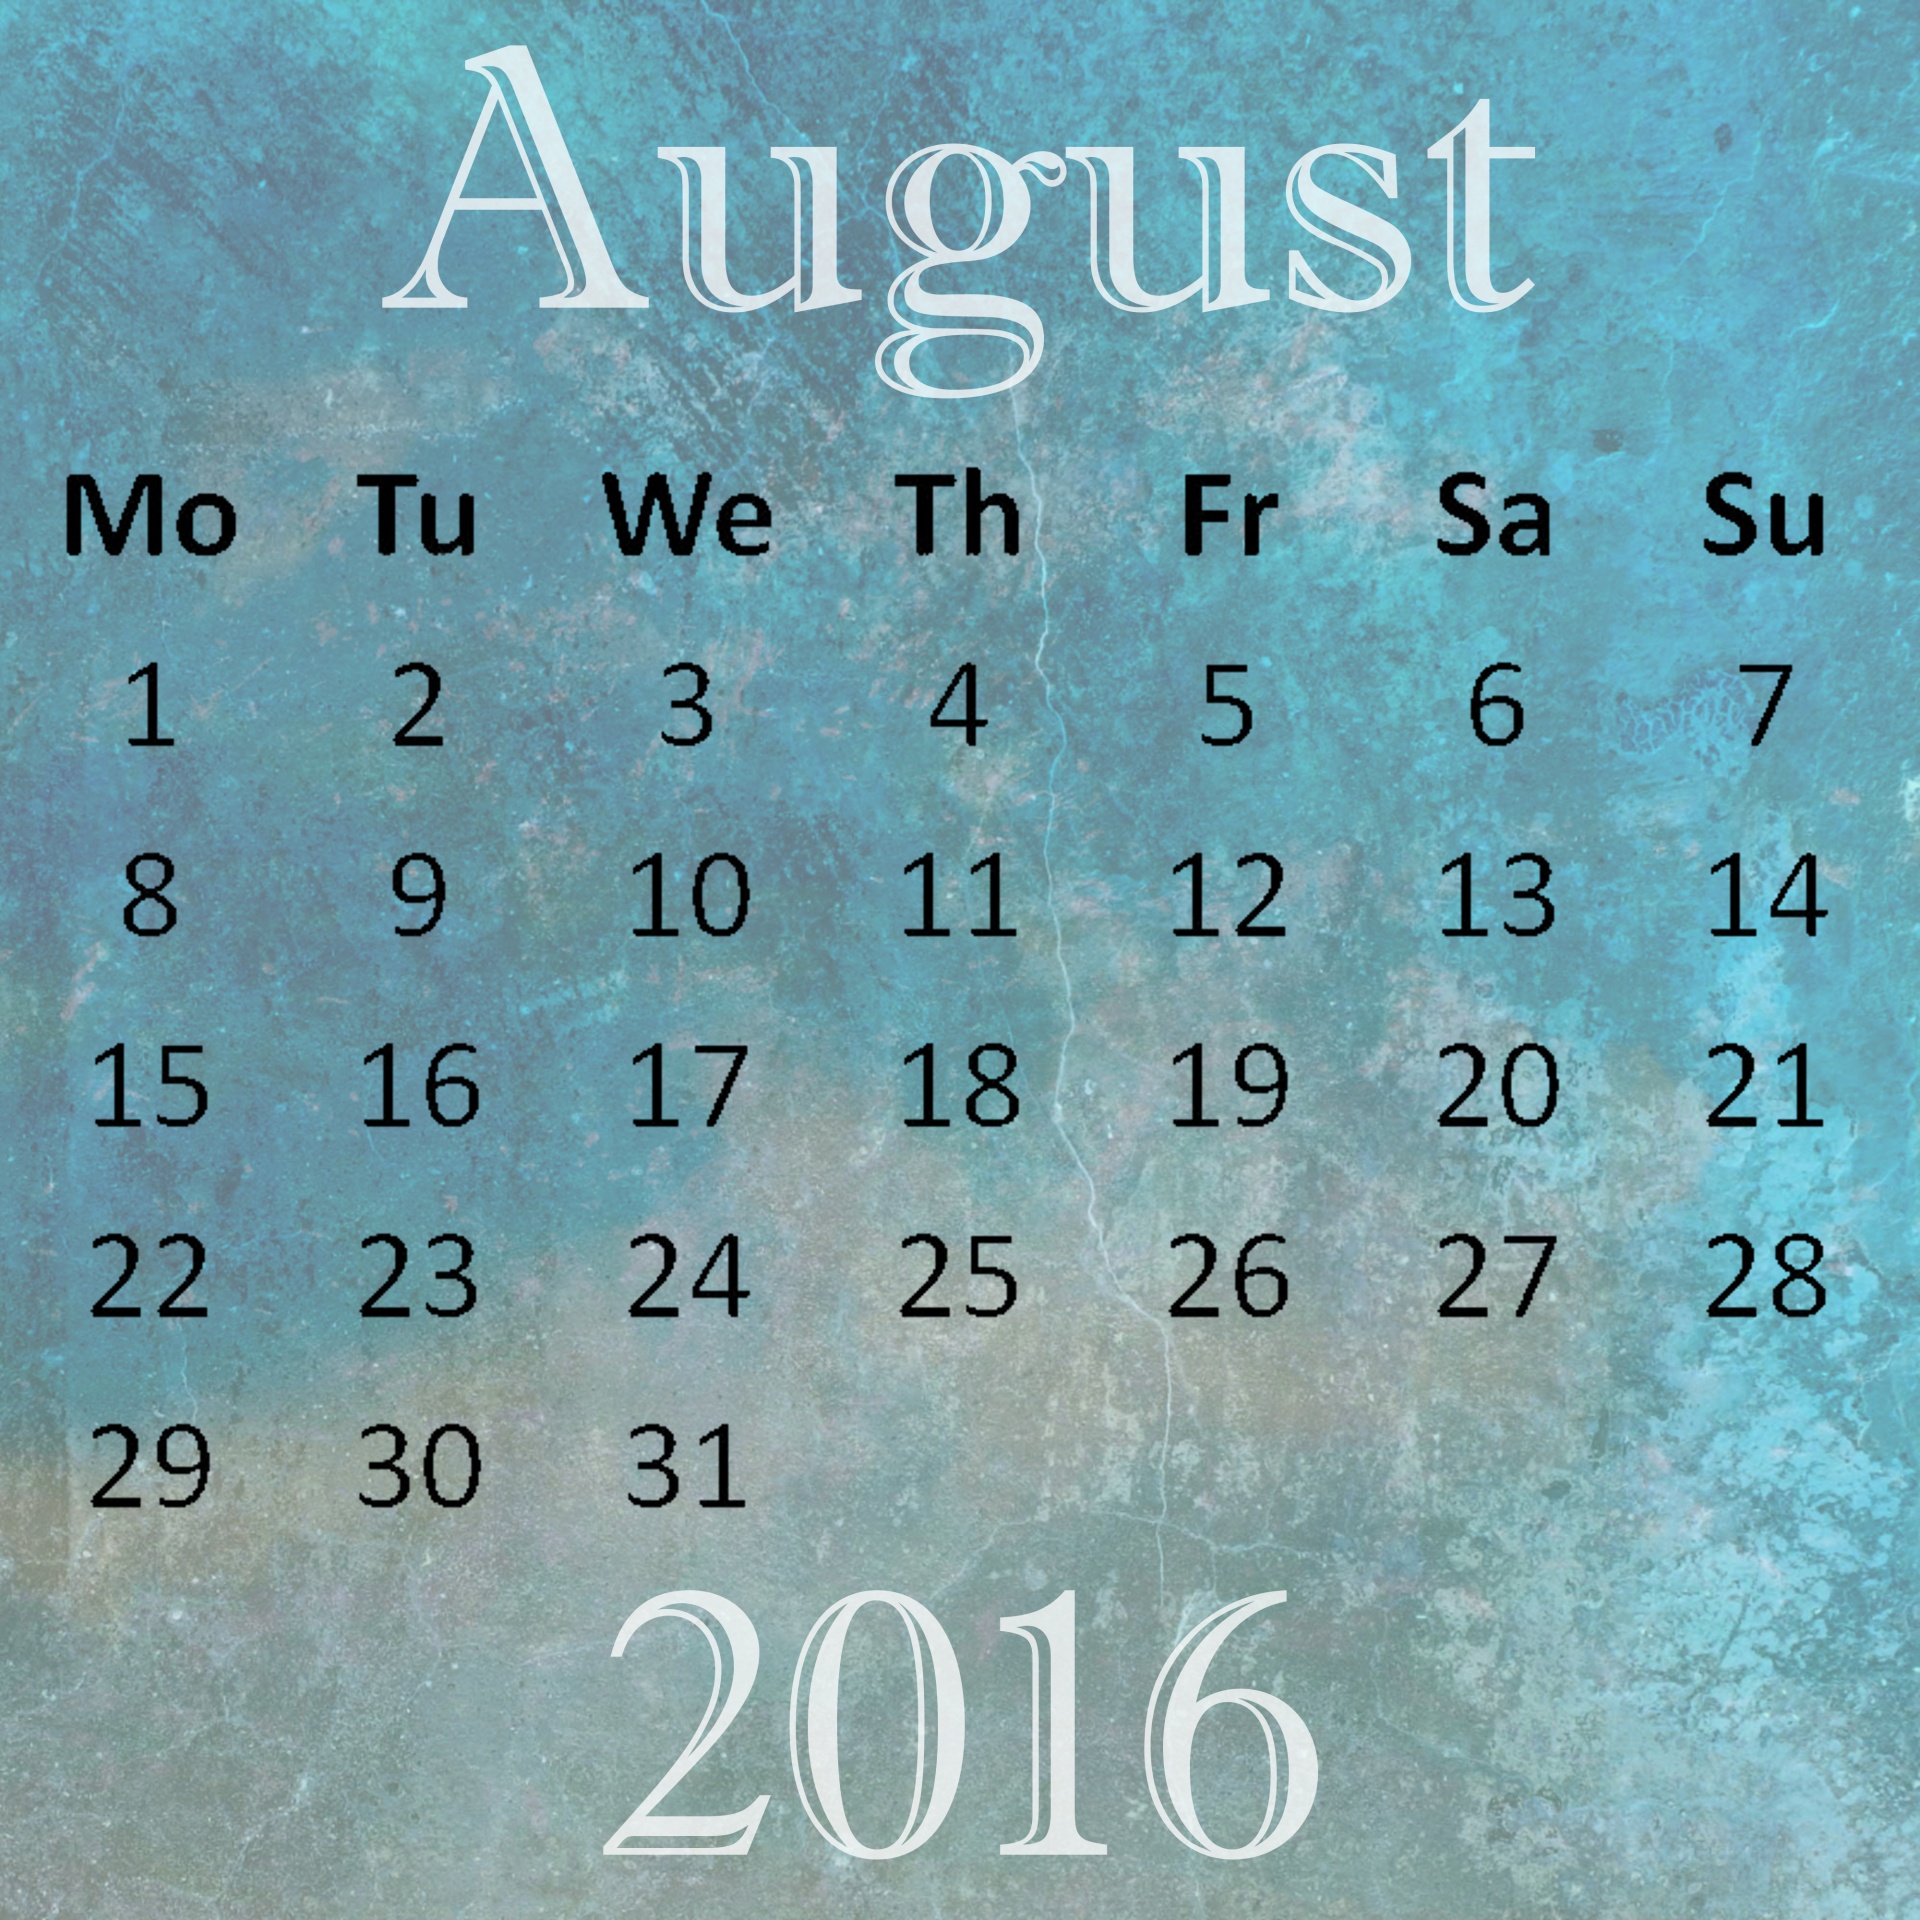 August 16 Calendar Poster Wallpaper Free Image From Needpix Com